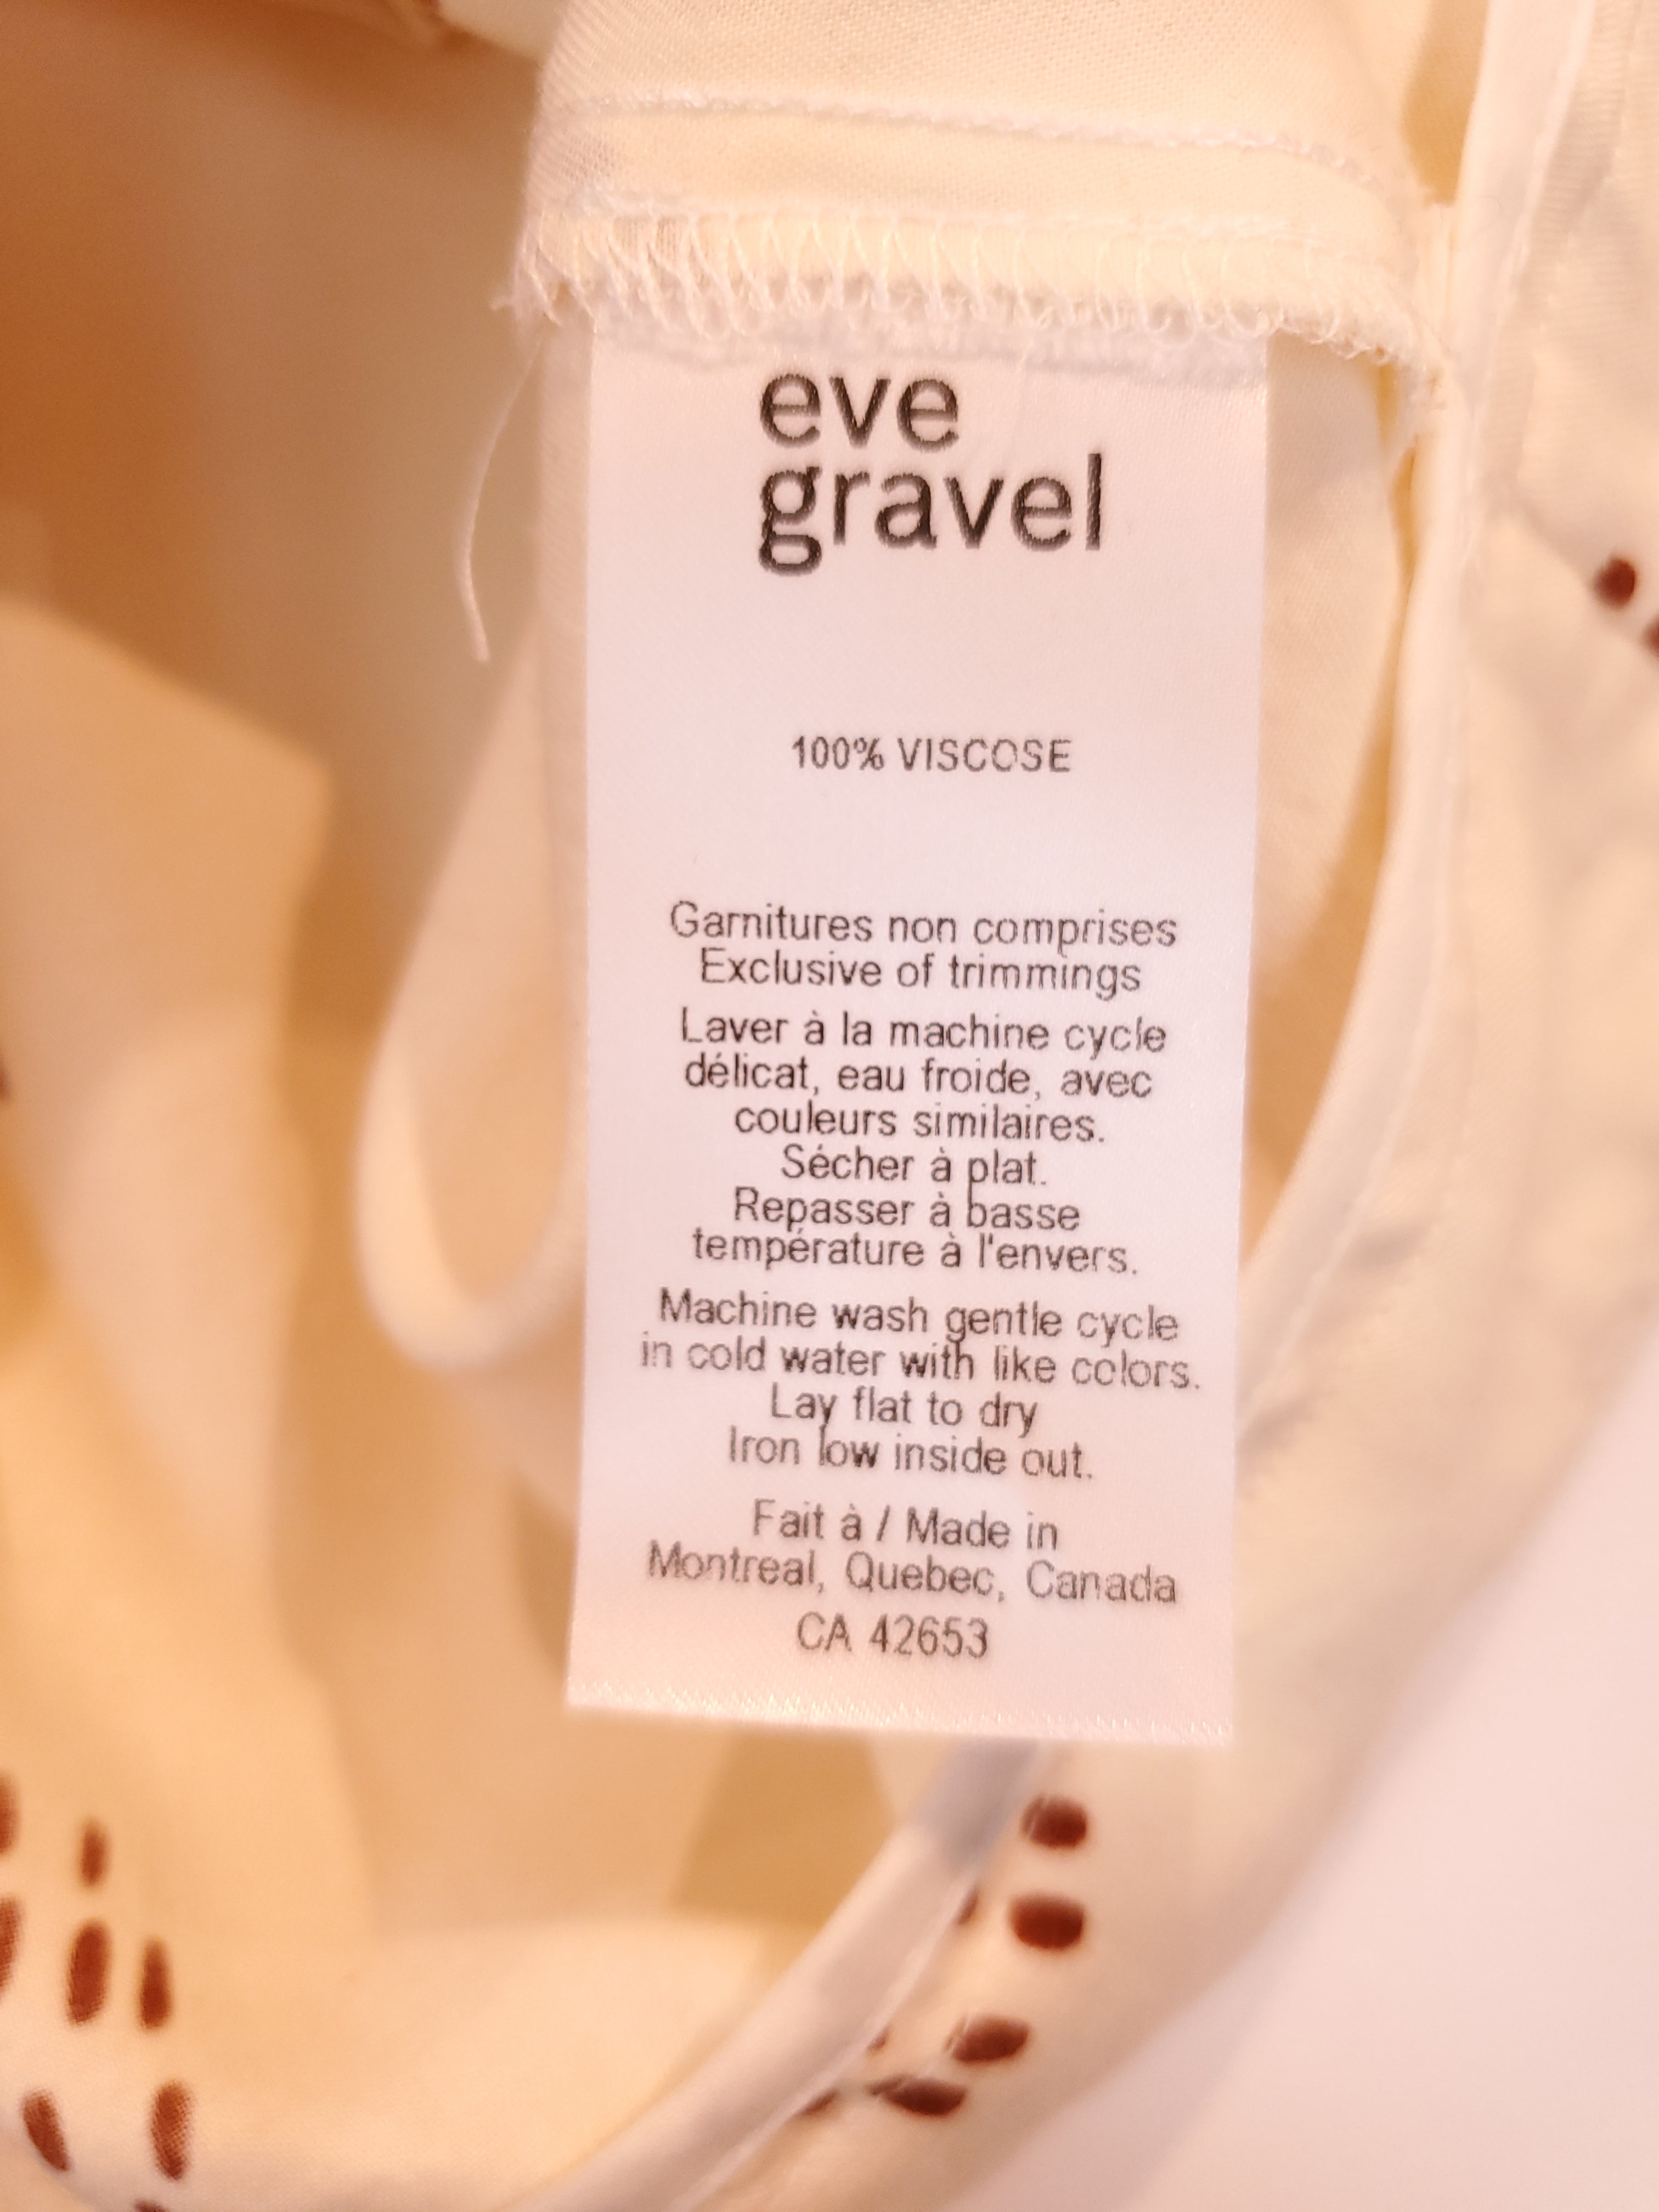 Top Eve Gravel